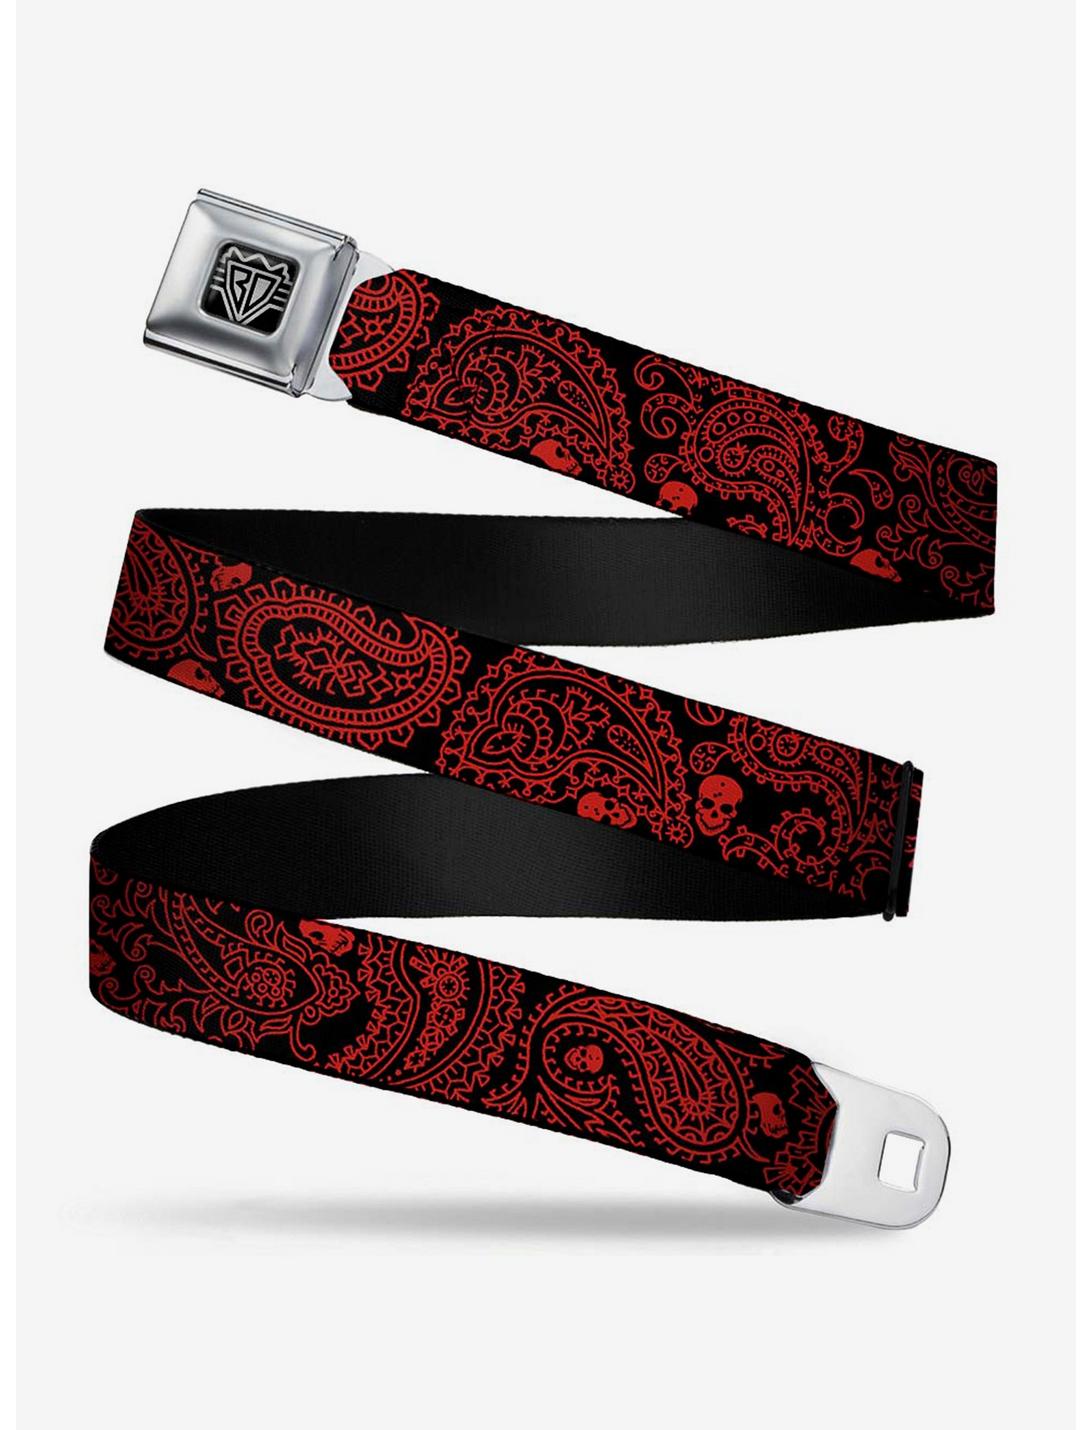 Bandana Skull Print Seatbelt Belt Black Red, RED, hi-res